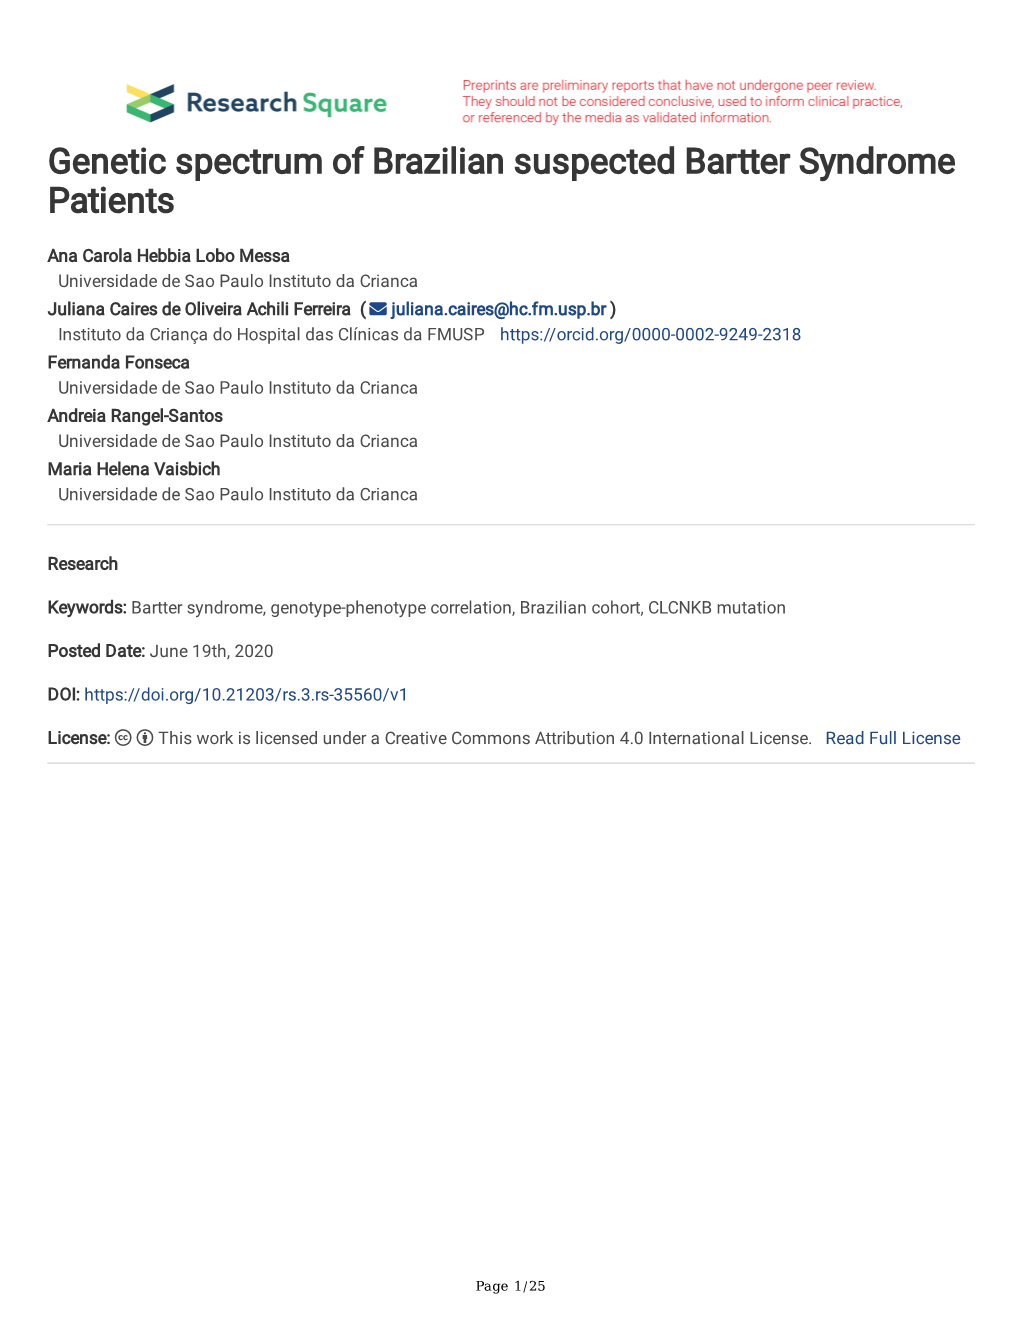 Genetic Spectrum of Brazilian Suspected Bartter Syndrome Patients